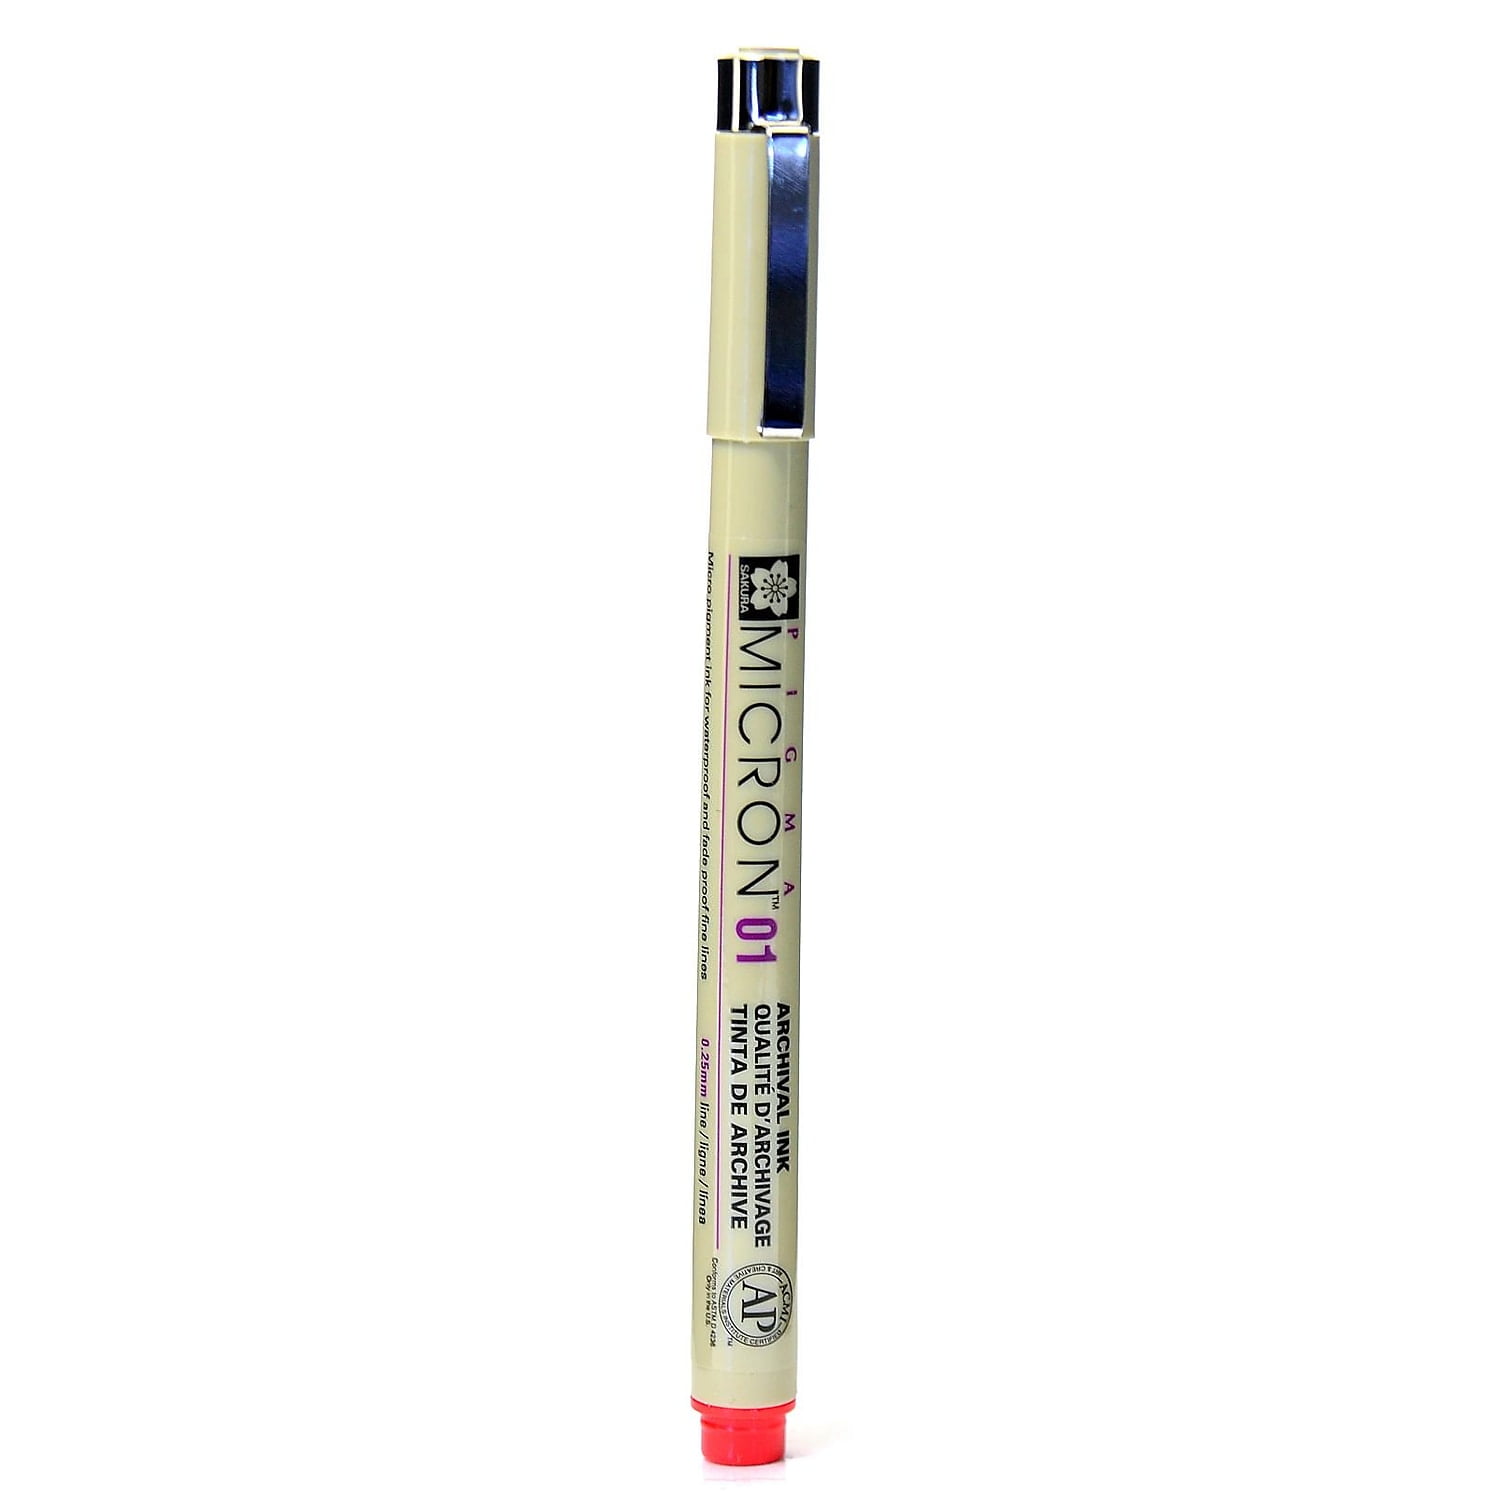 Pigma Micron Pen 6-Pack